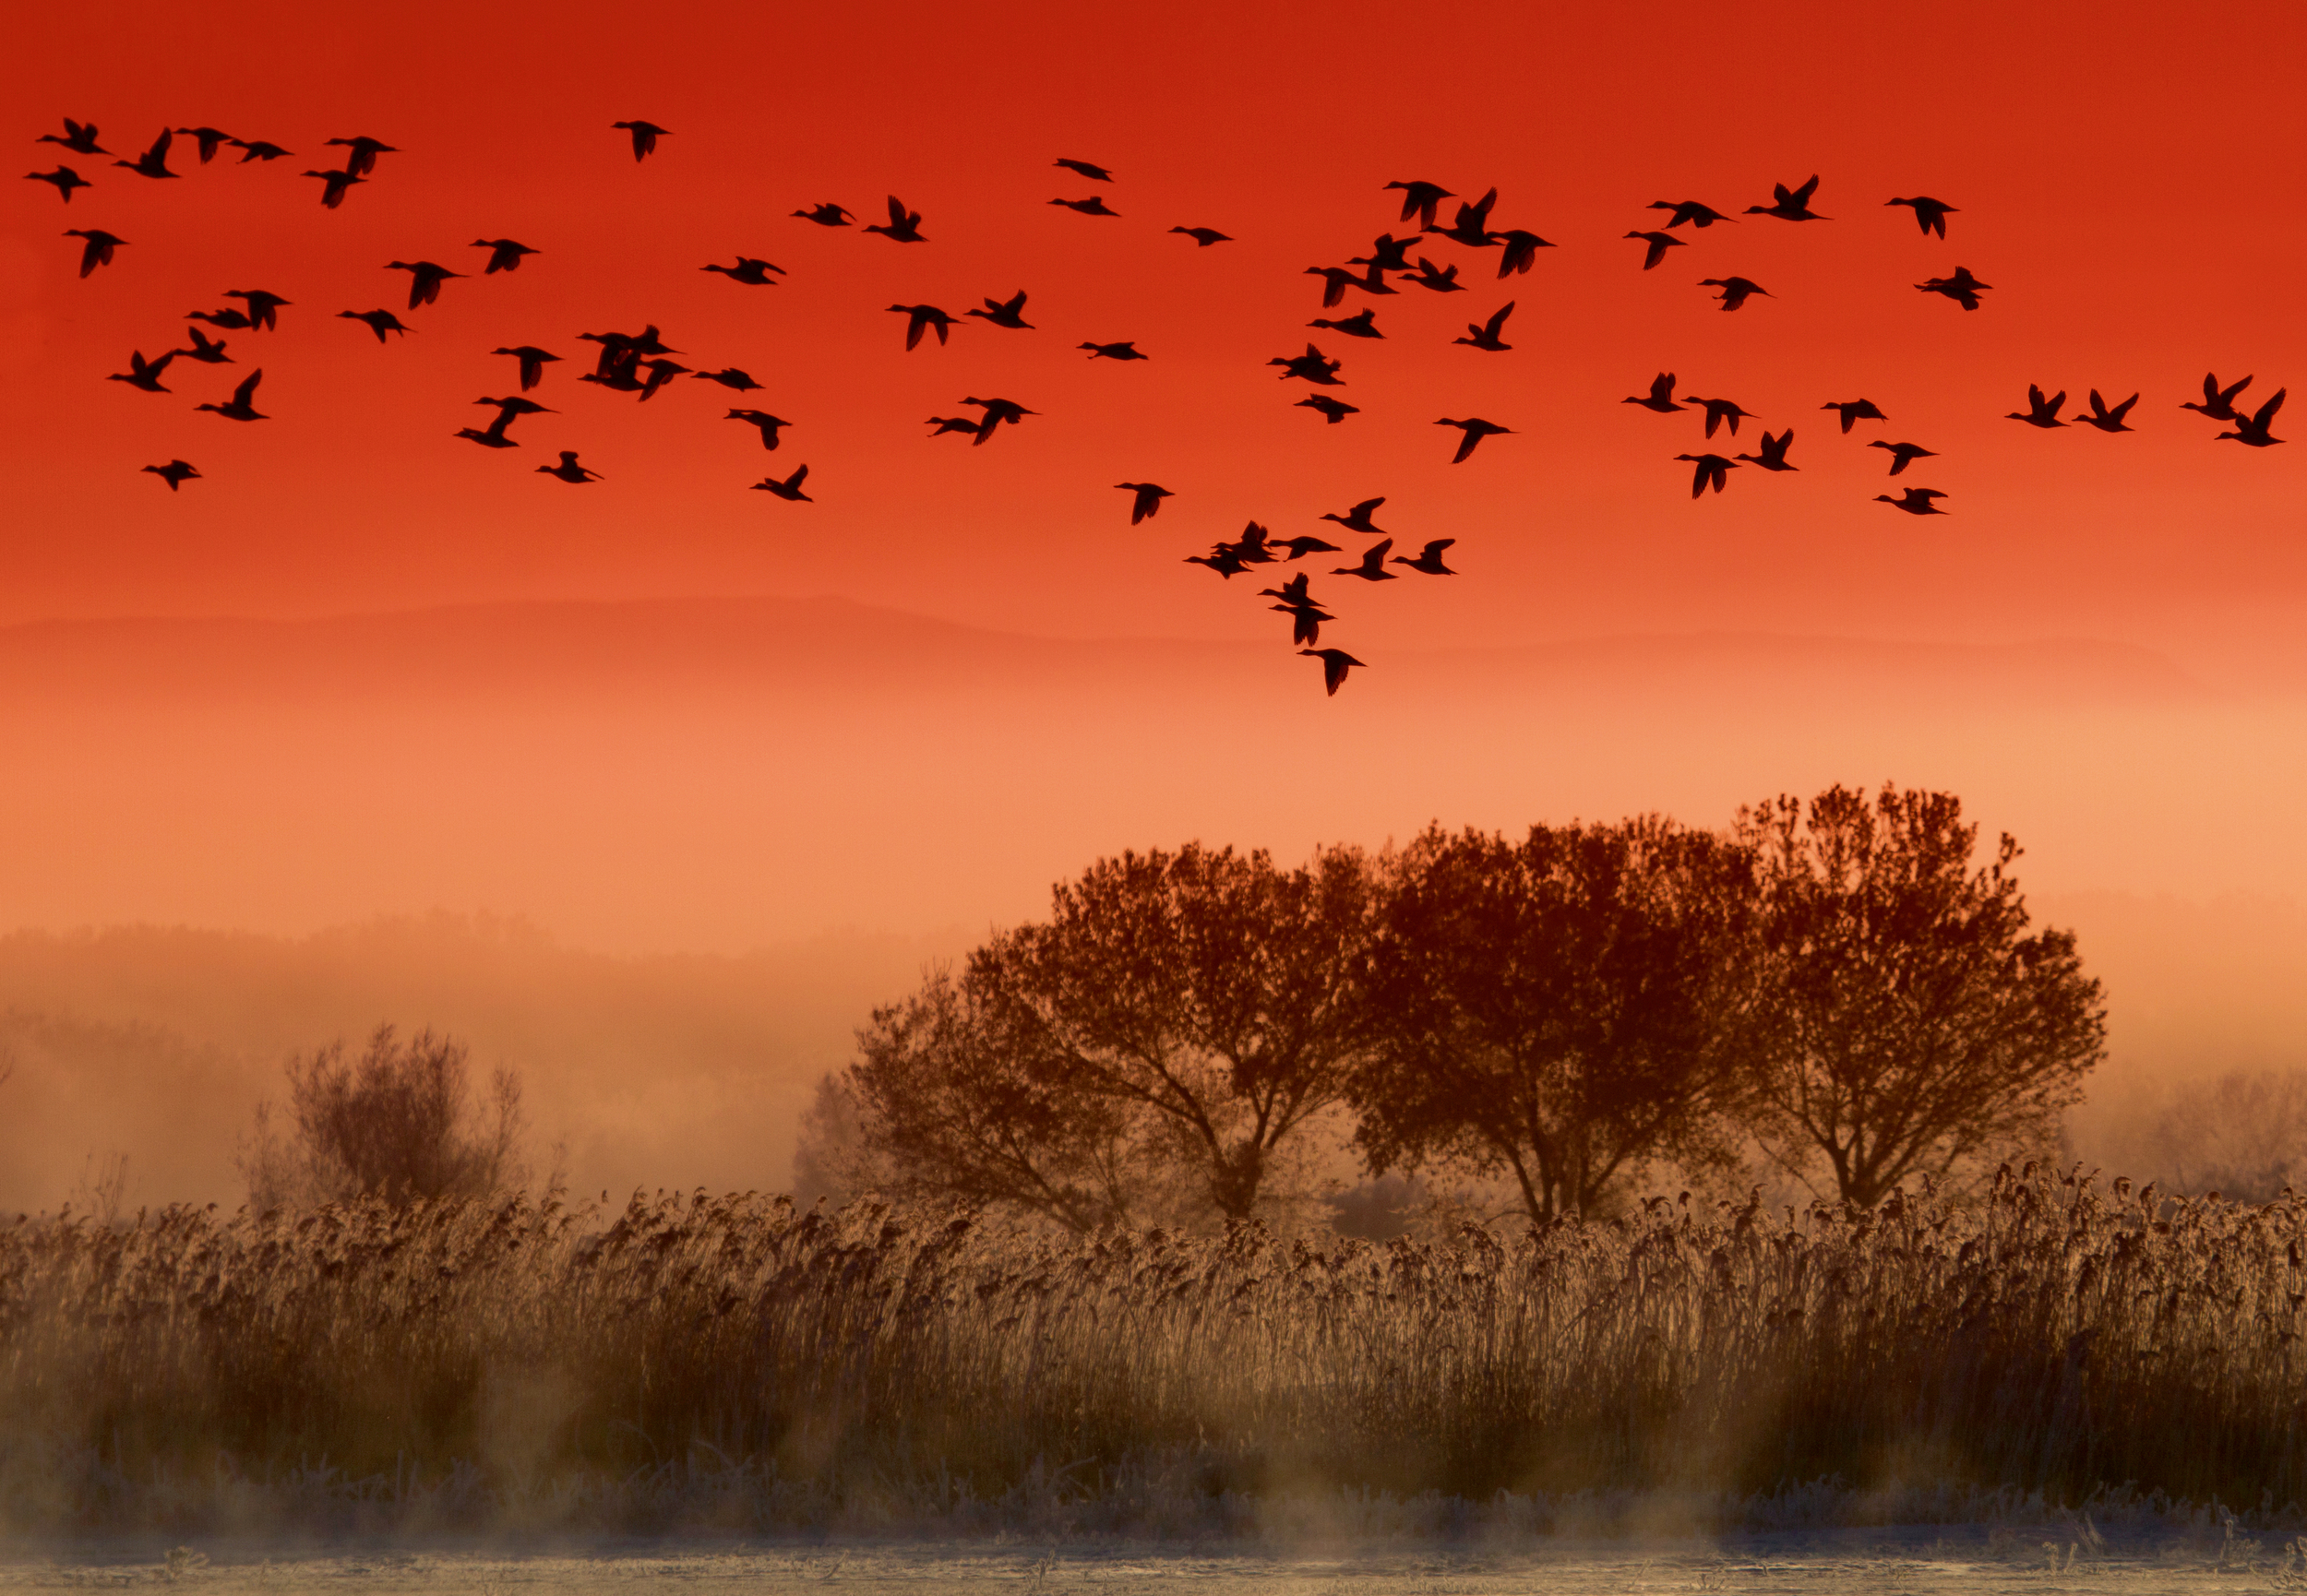 Rick Sammon's Birds011.jpg